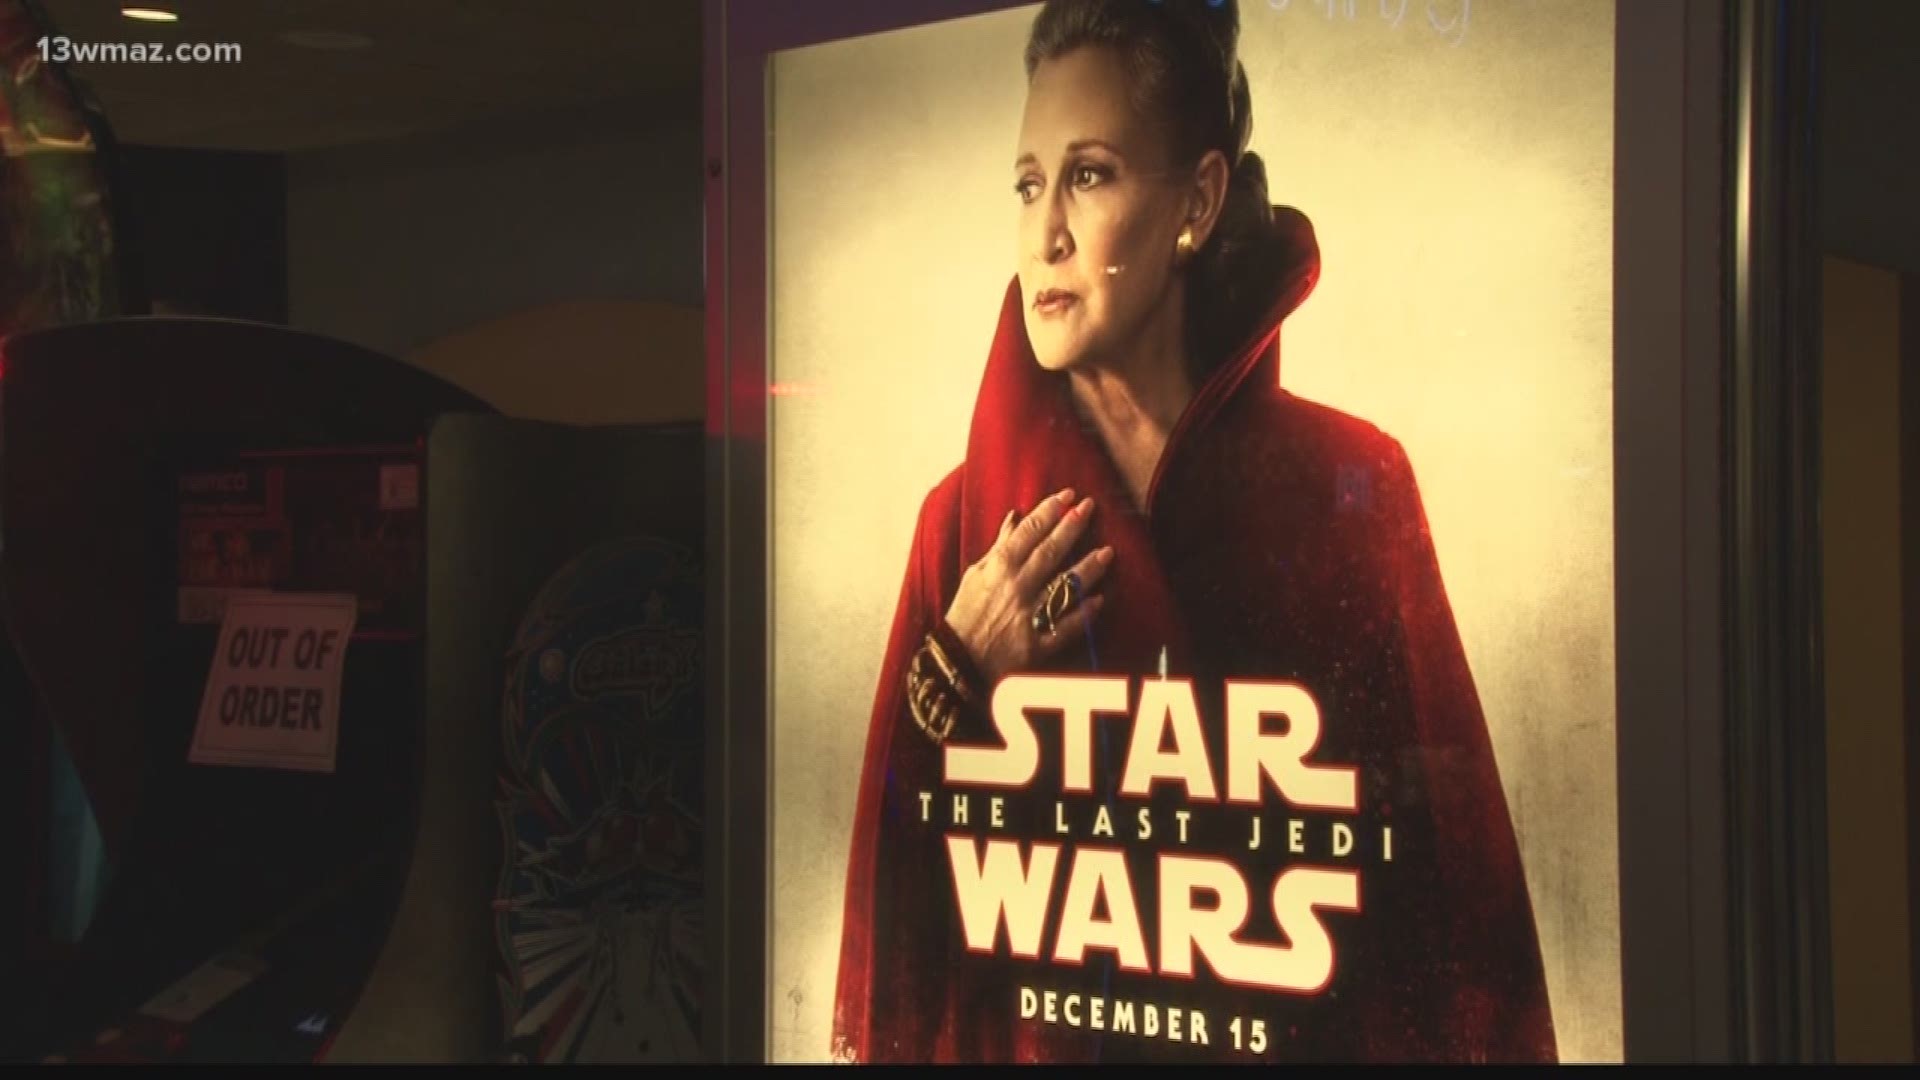 Star Wars flock to see 'The Last Jedi'